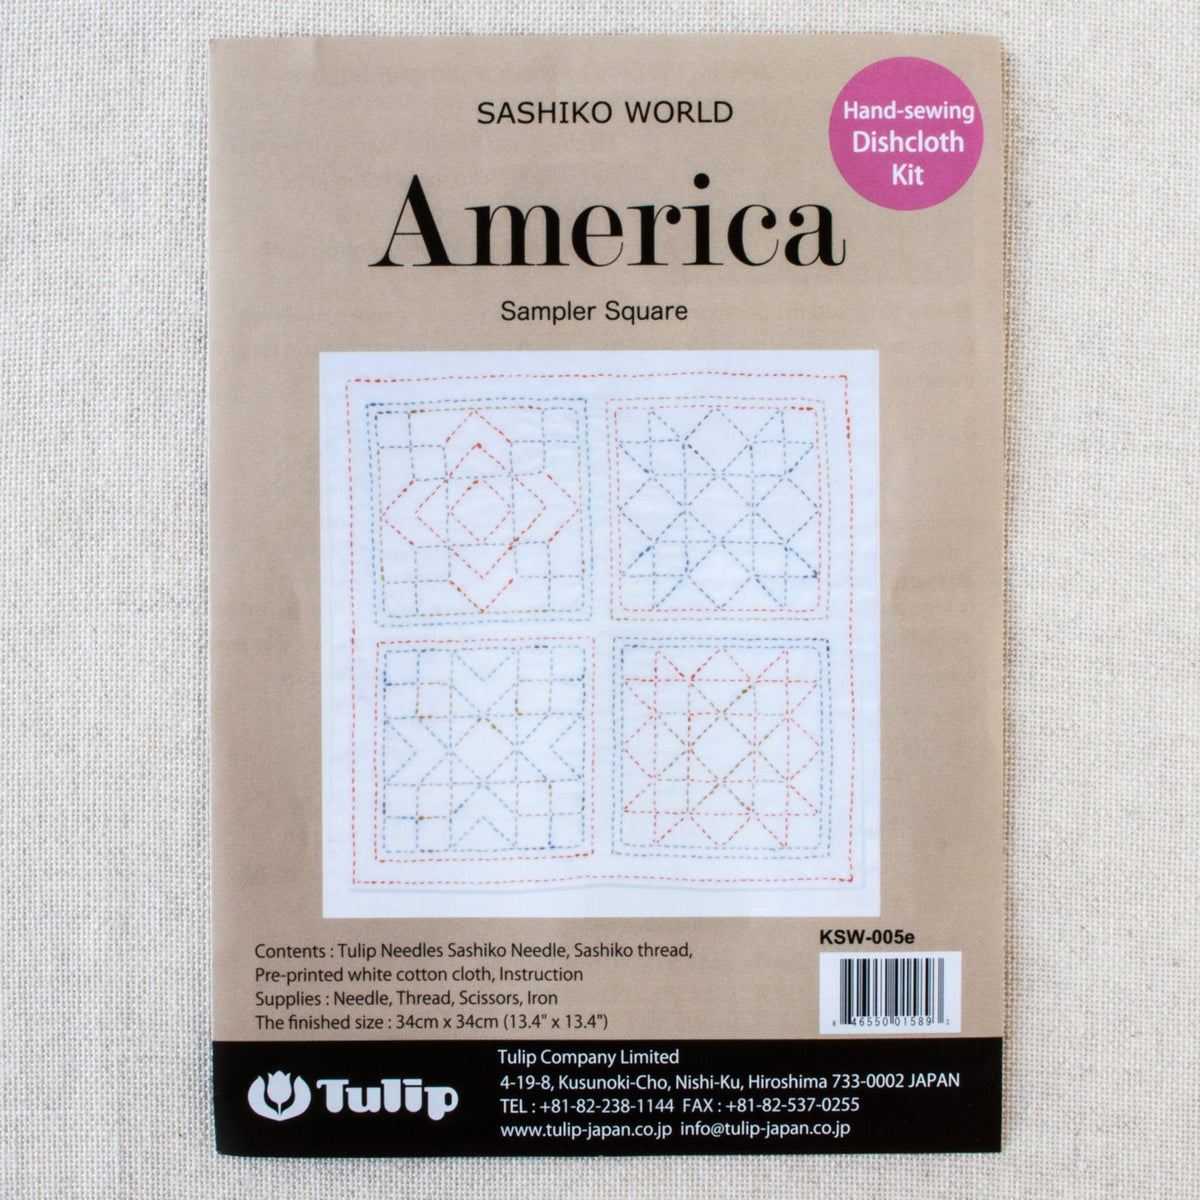 Sashiko World Embroidery Kit - Sampler Square